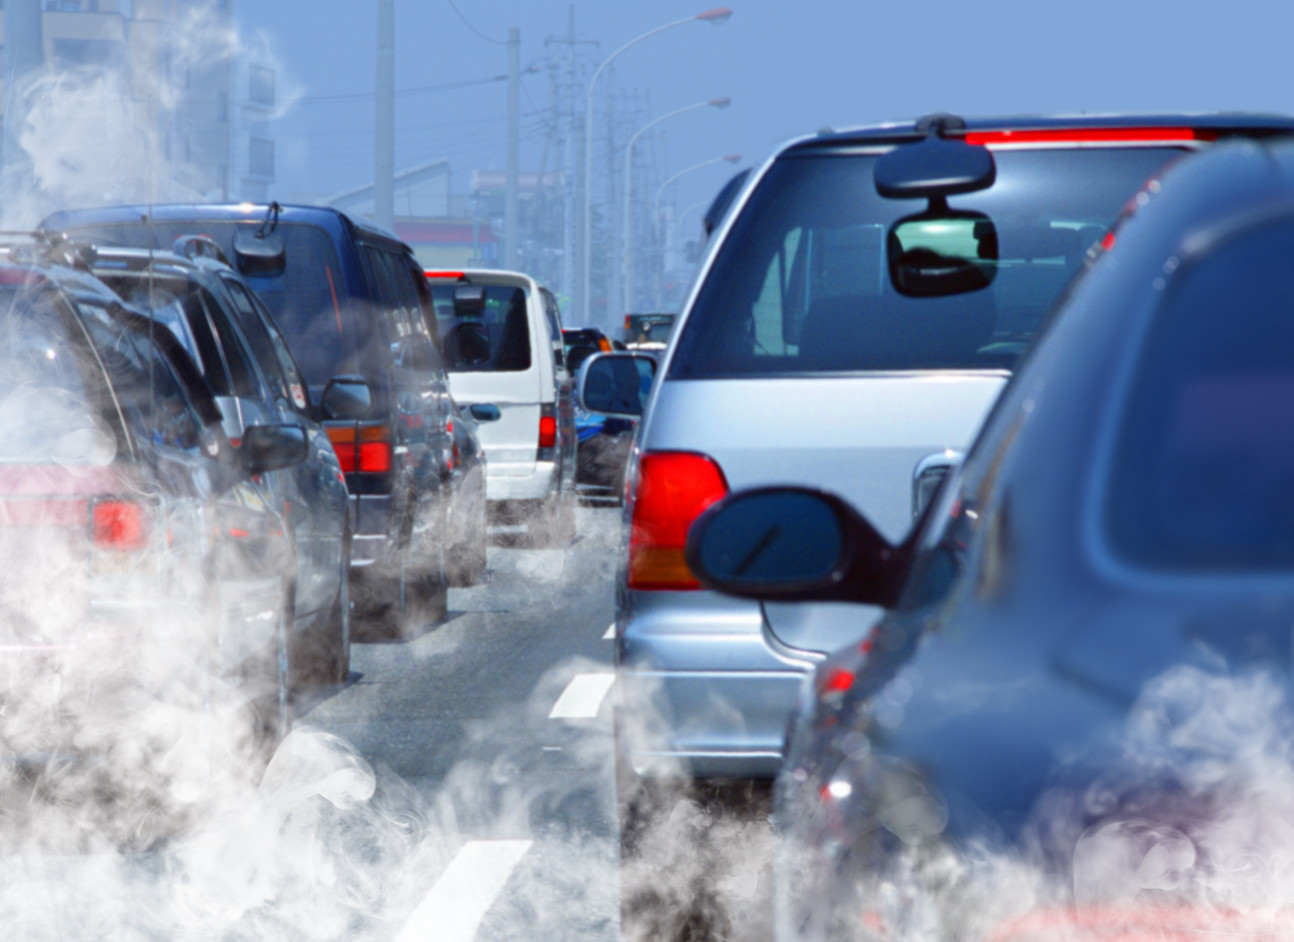 Idling cars releasing emissions